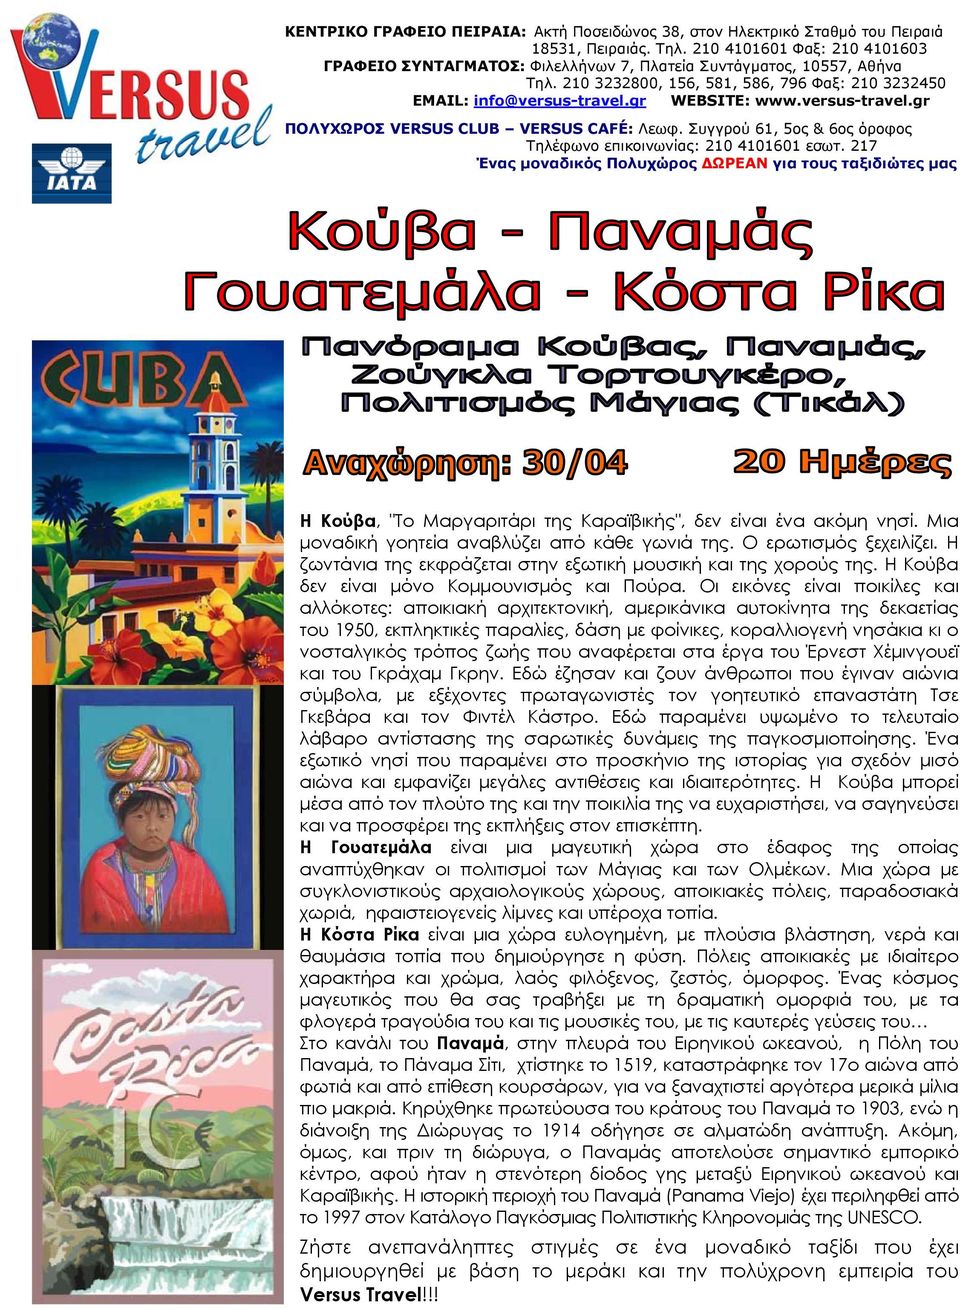 versus-travel.gr ΠΟΛΥΧΩΡΟΣ VERSUS CLUB VERSUS CAFÉ: Λεωφ. Συγγρού 61, 5ος & 6ος όροφος Τηλέφωνο επικοινωνίας: 210 4101601 εσωτ.